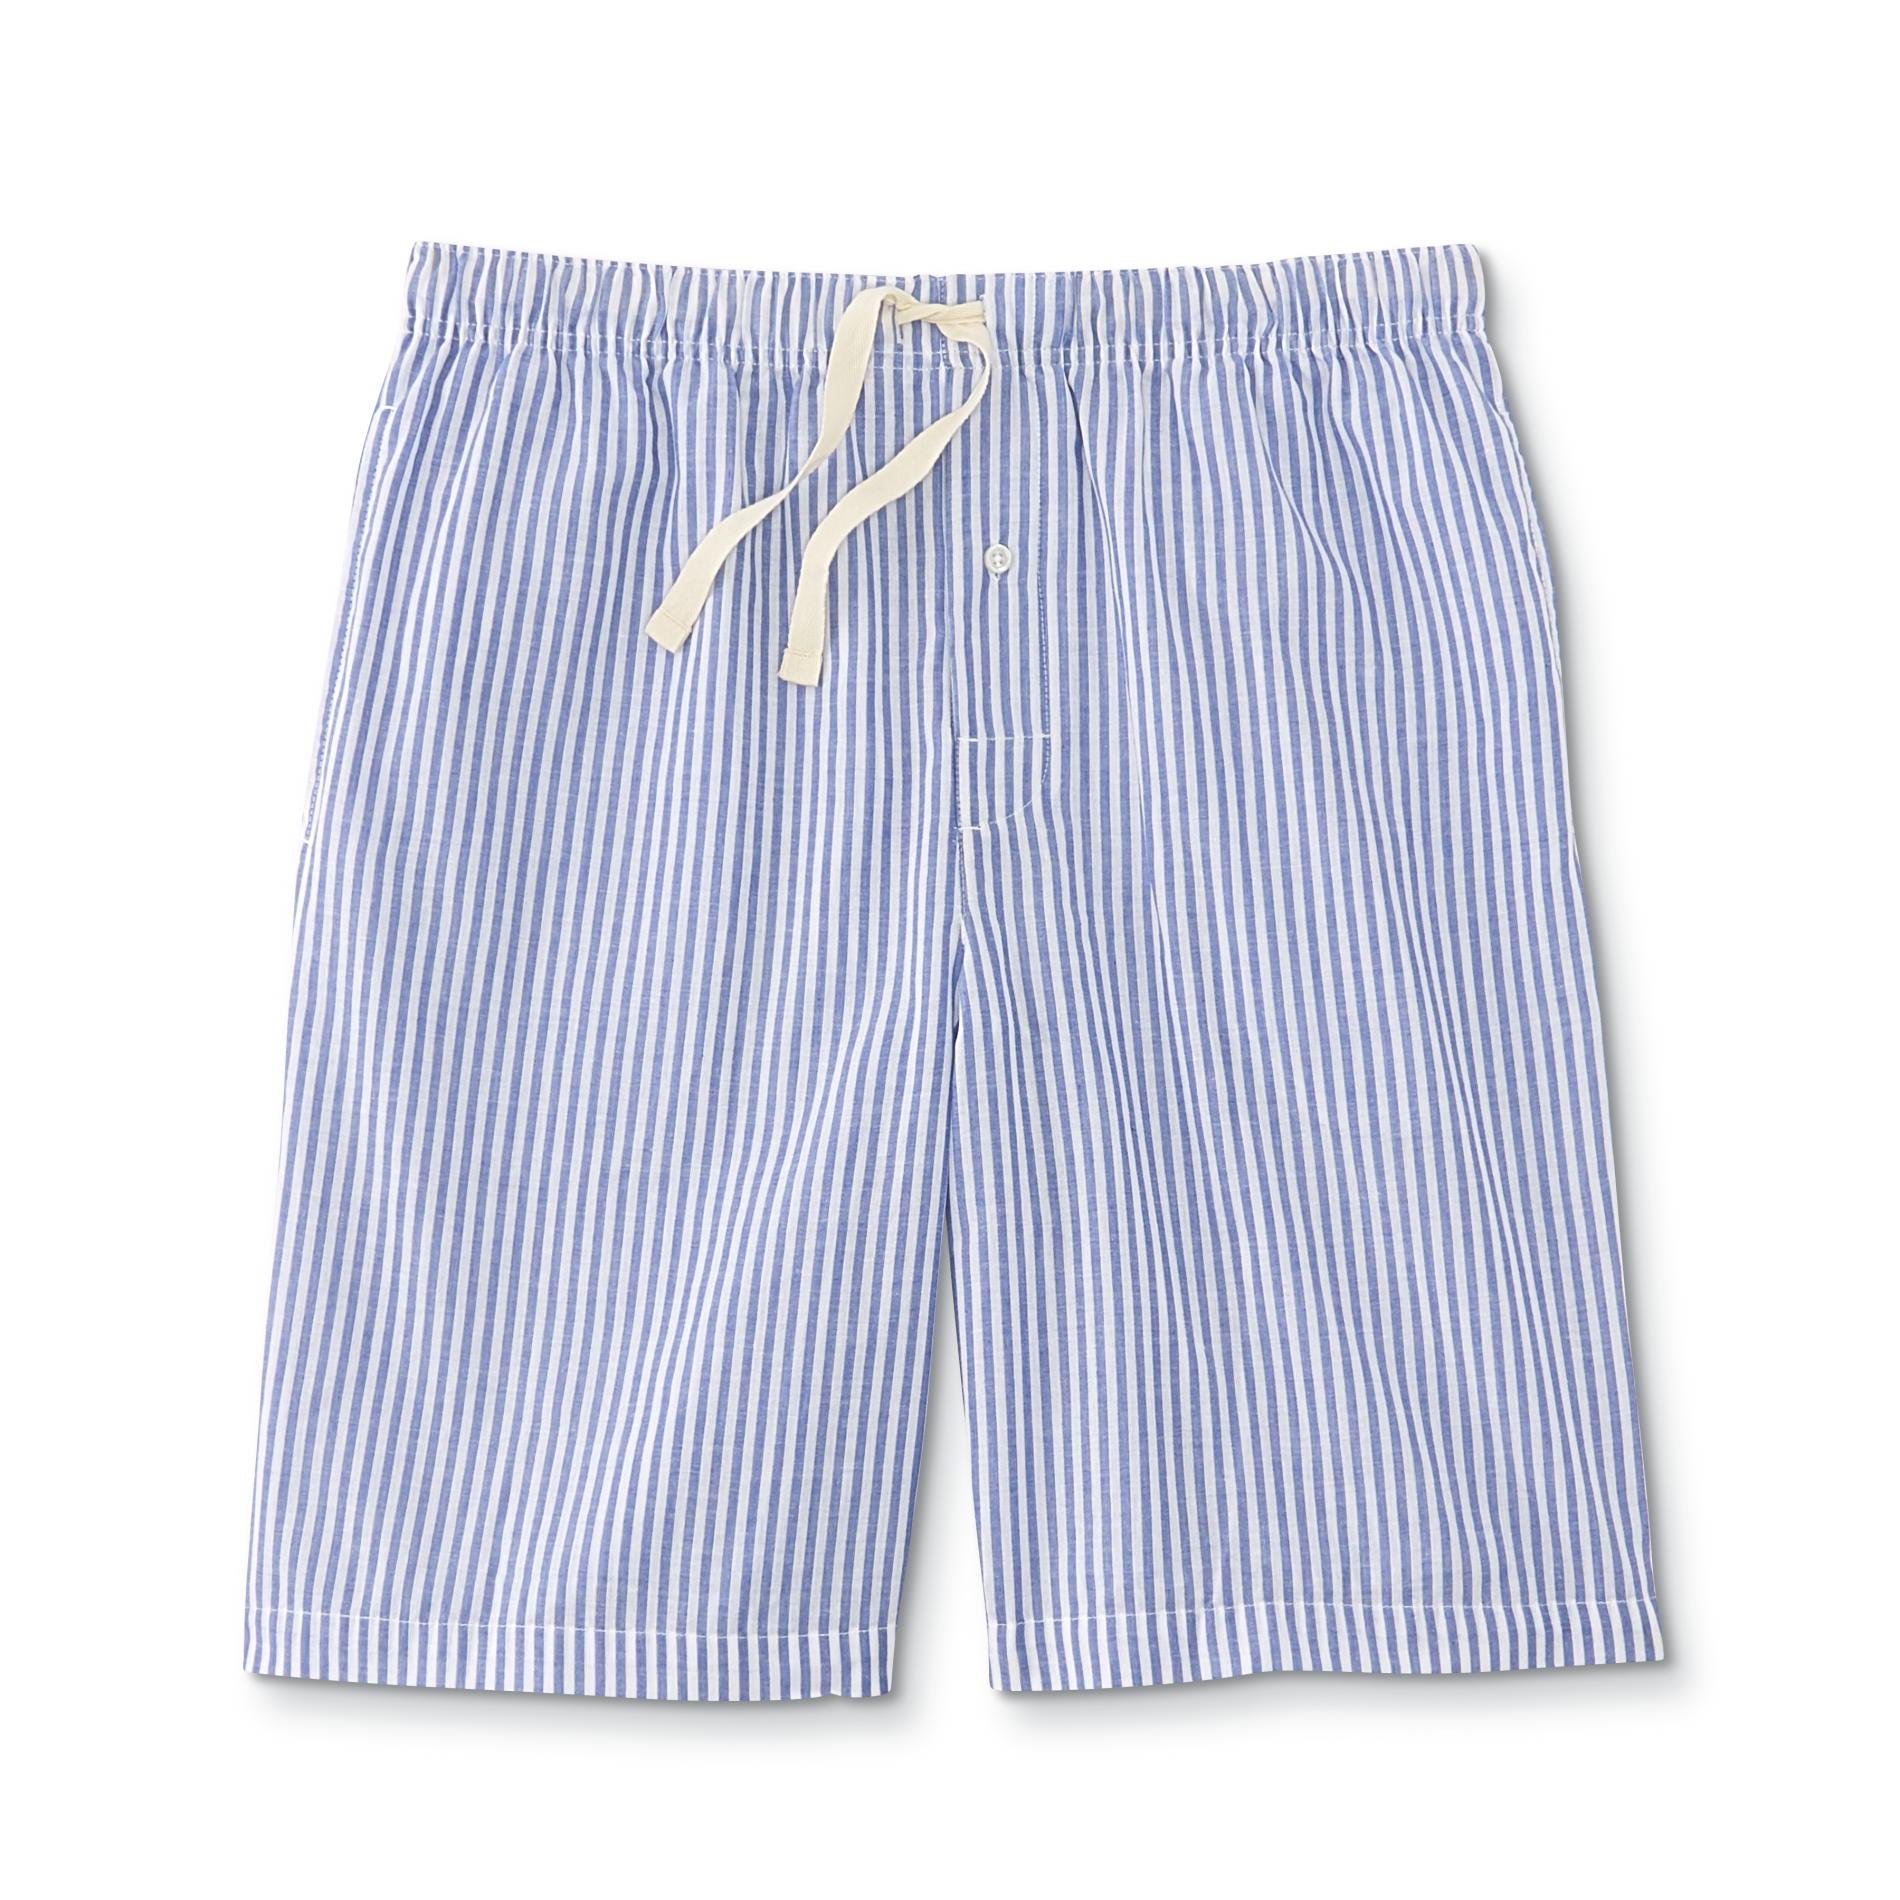 Basic Editions Men's Poplin Sleep Shorts - Striped